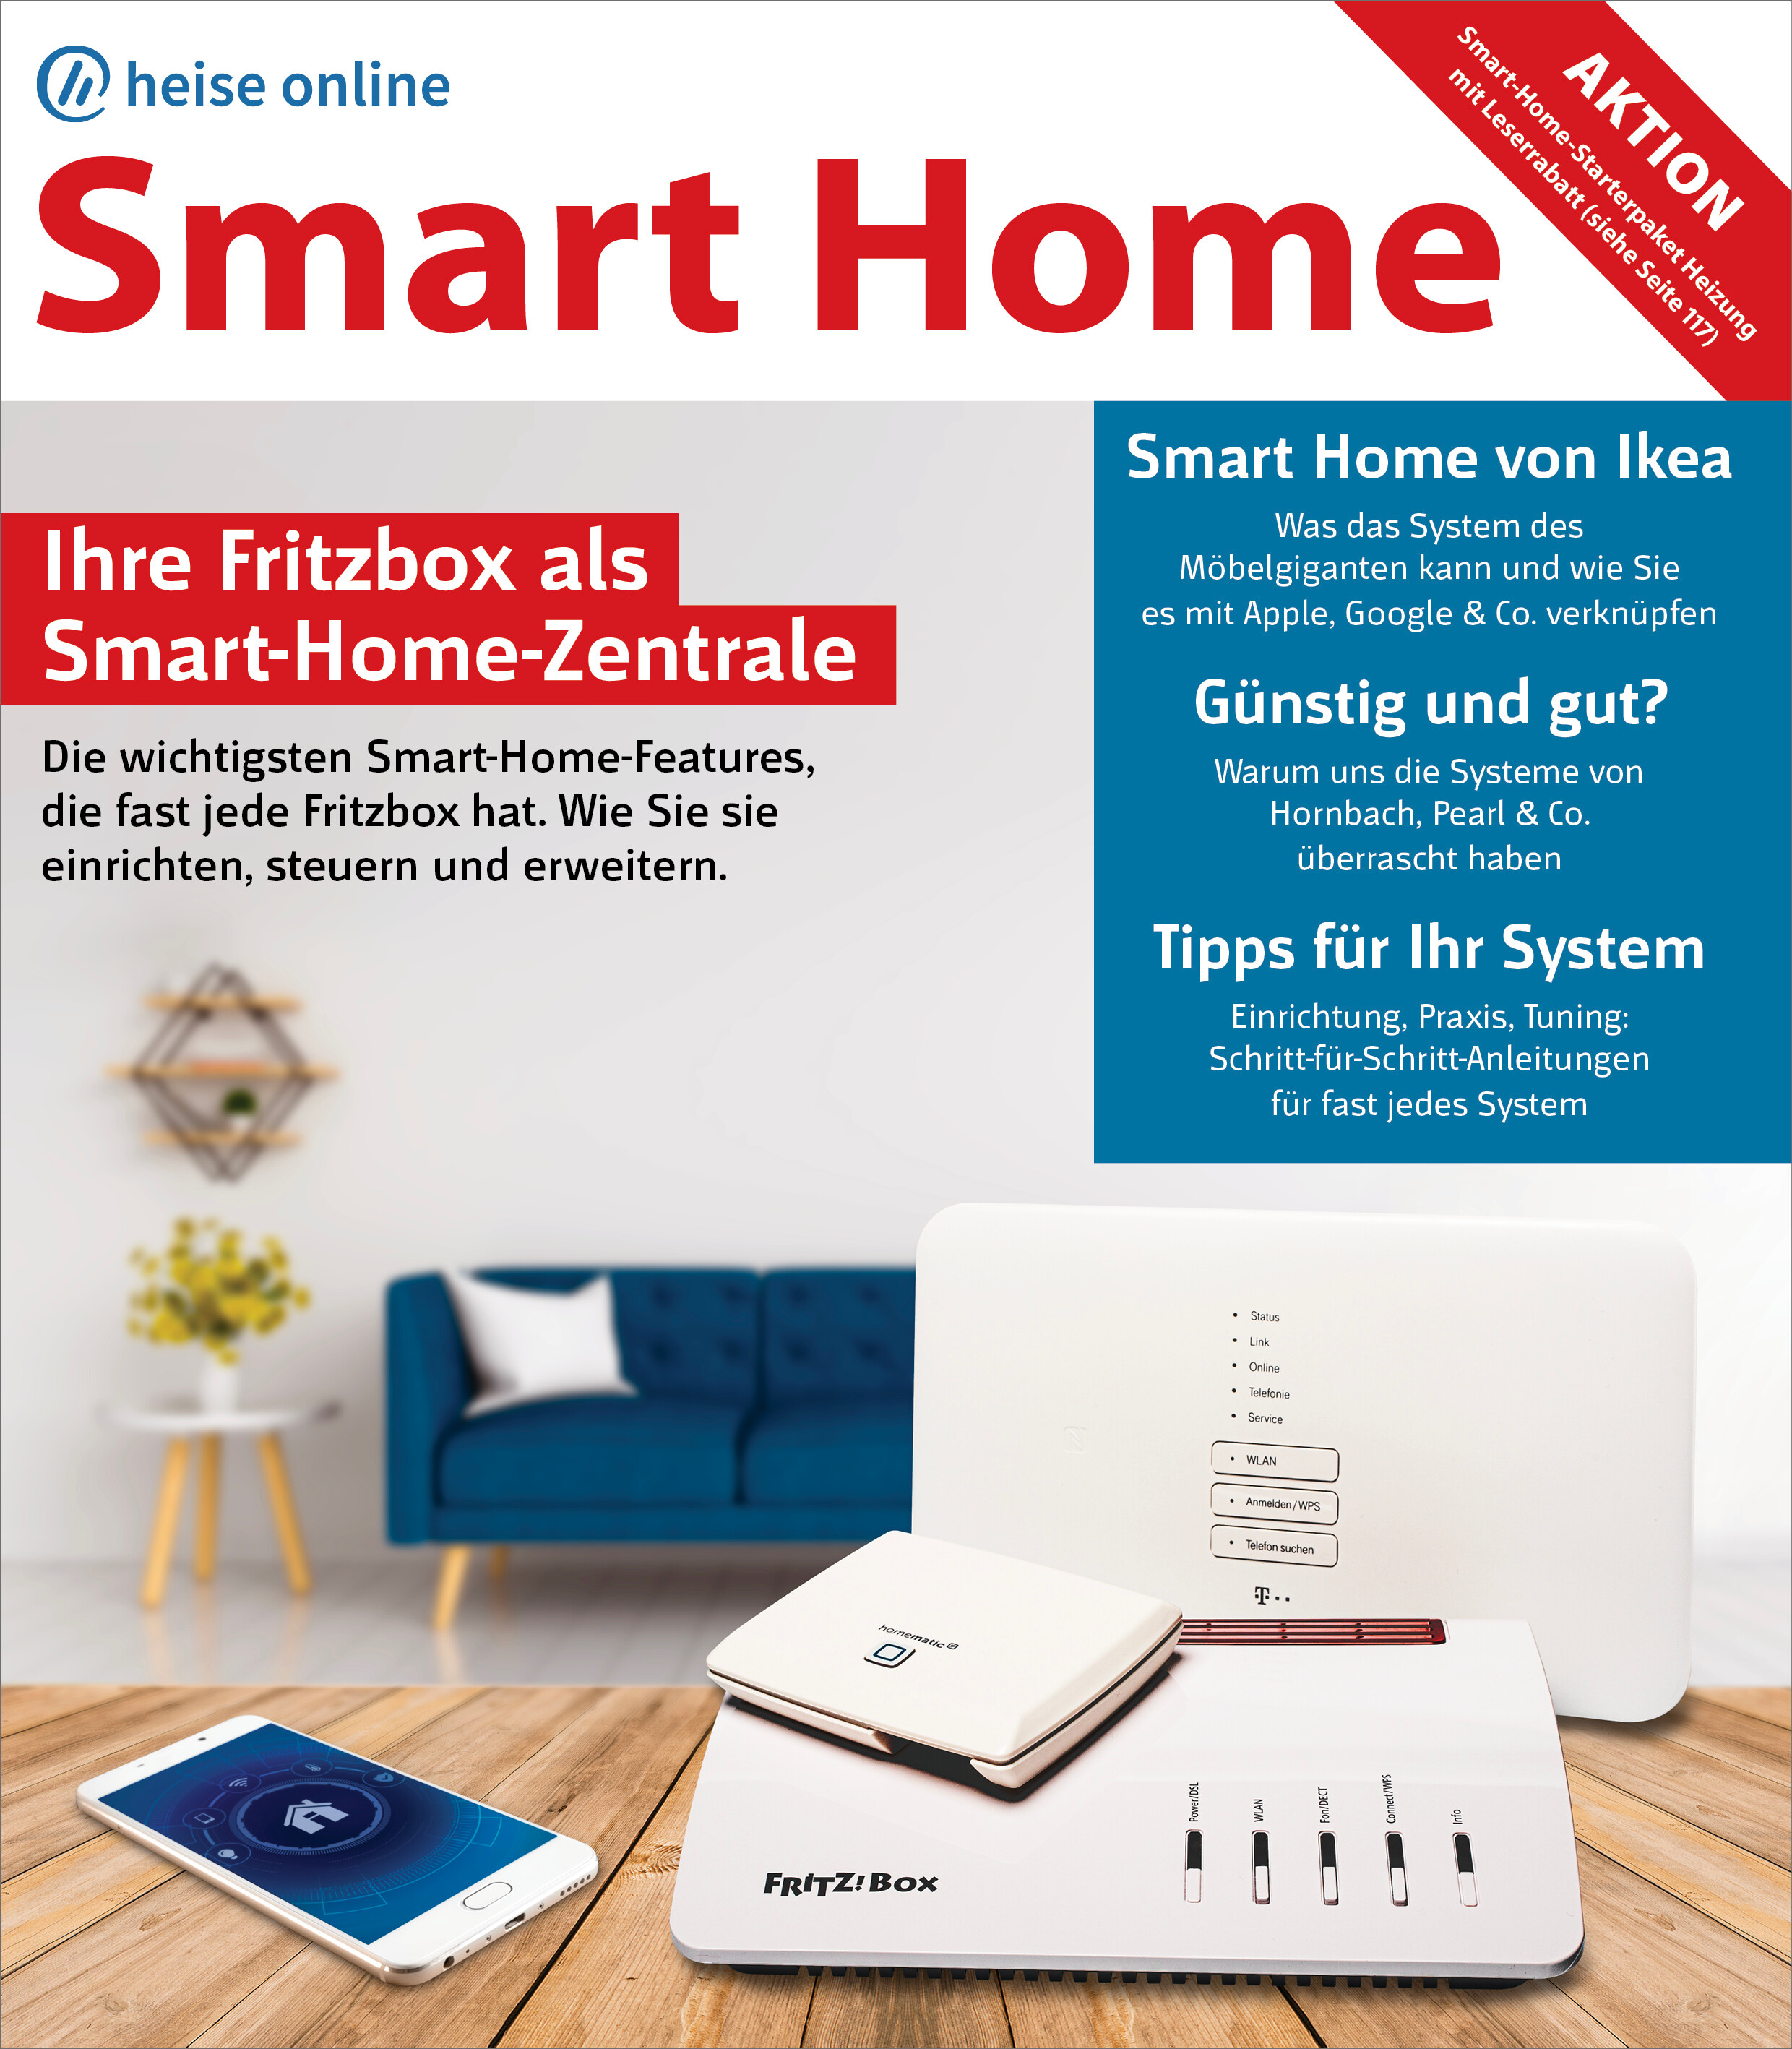 heise online Smart Home